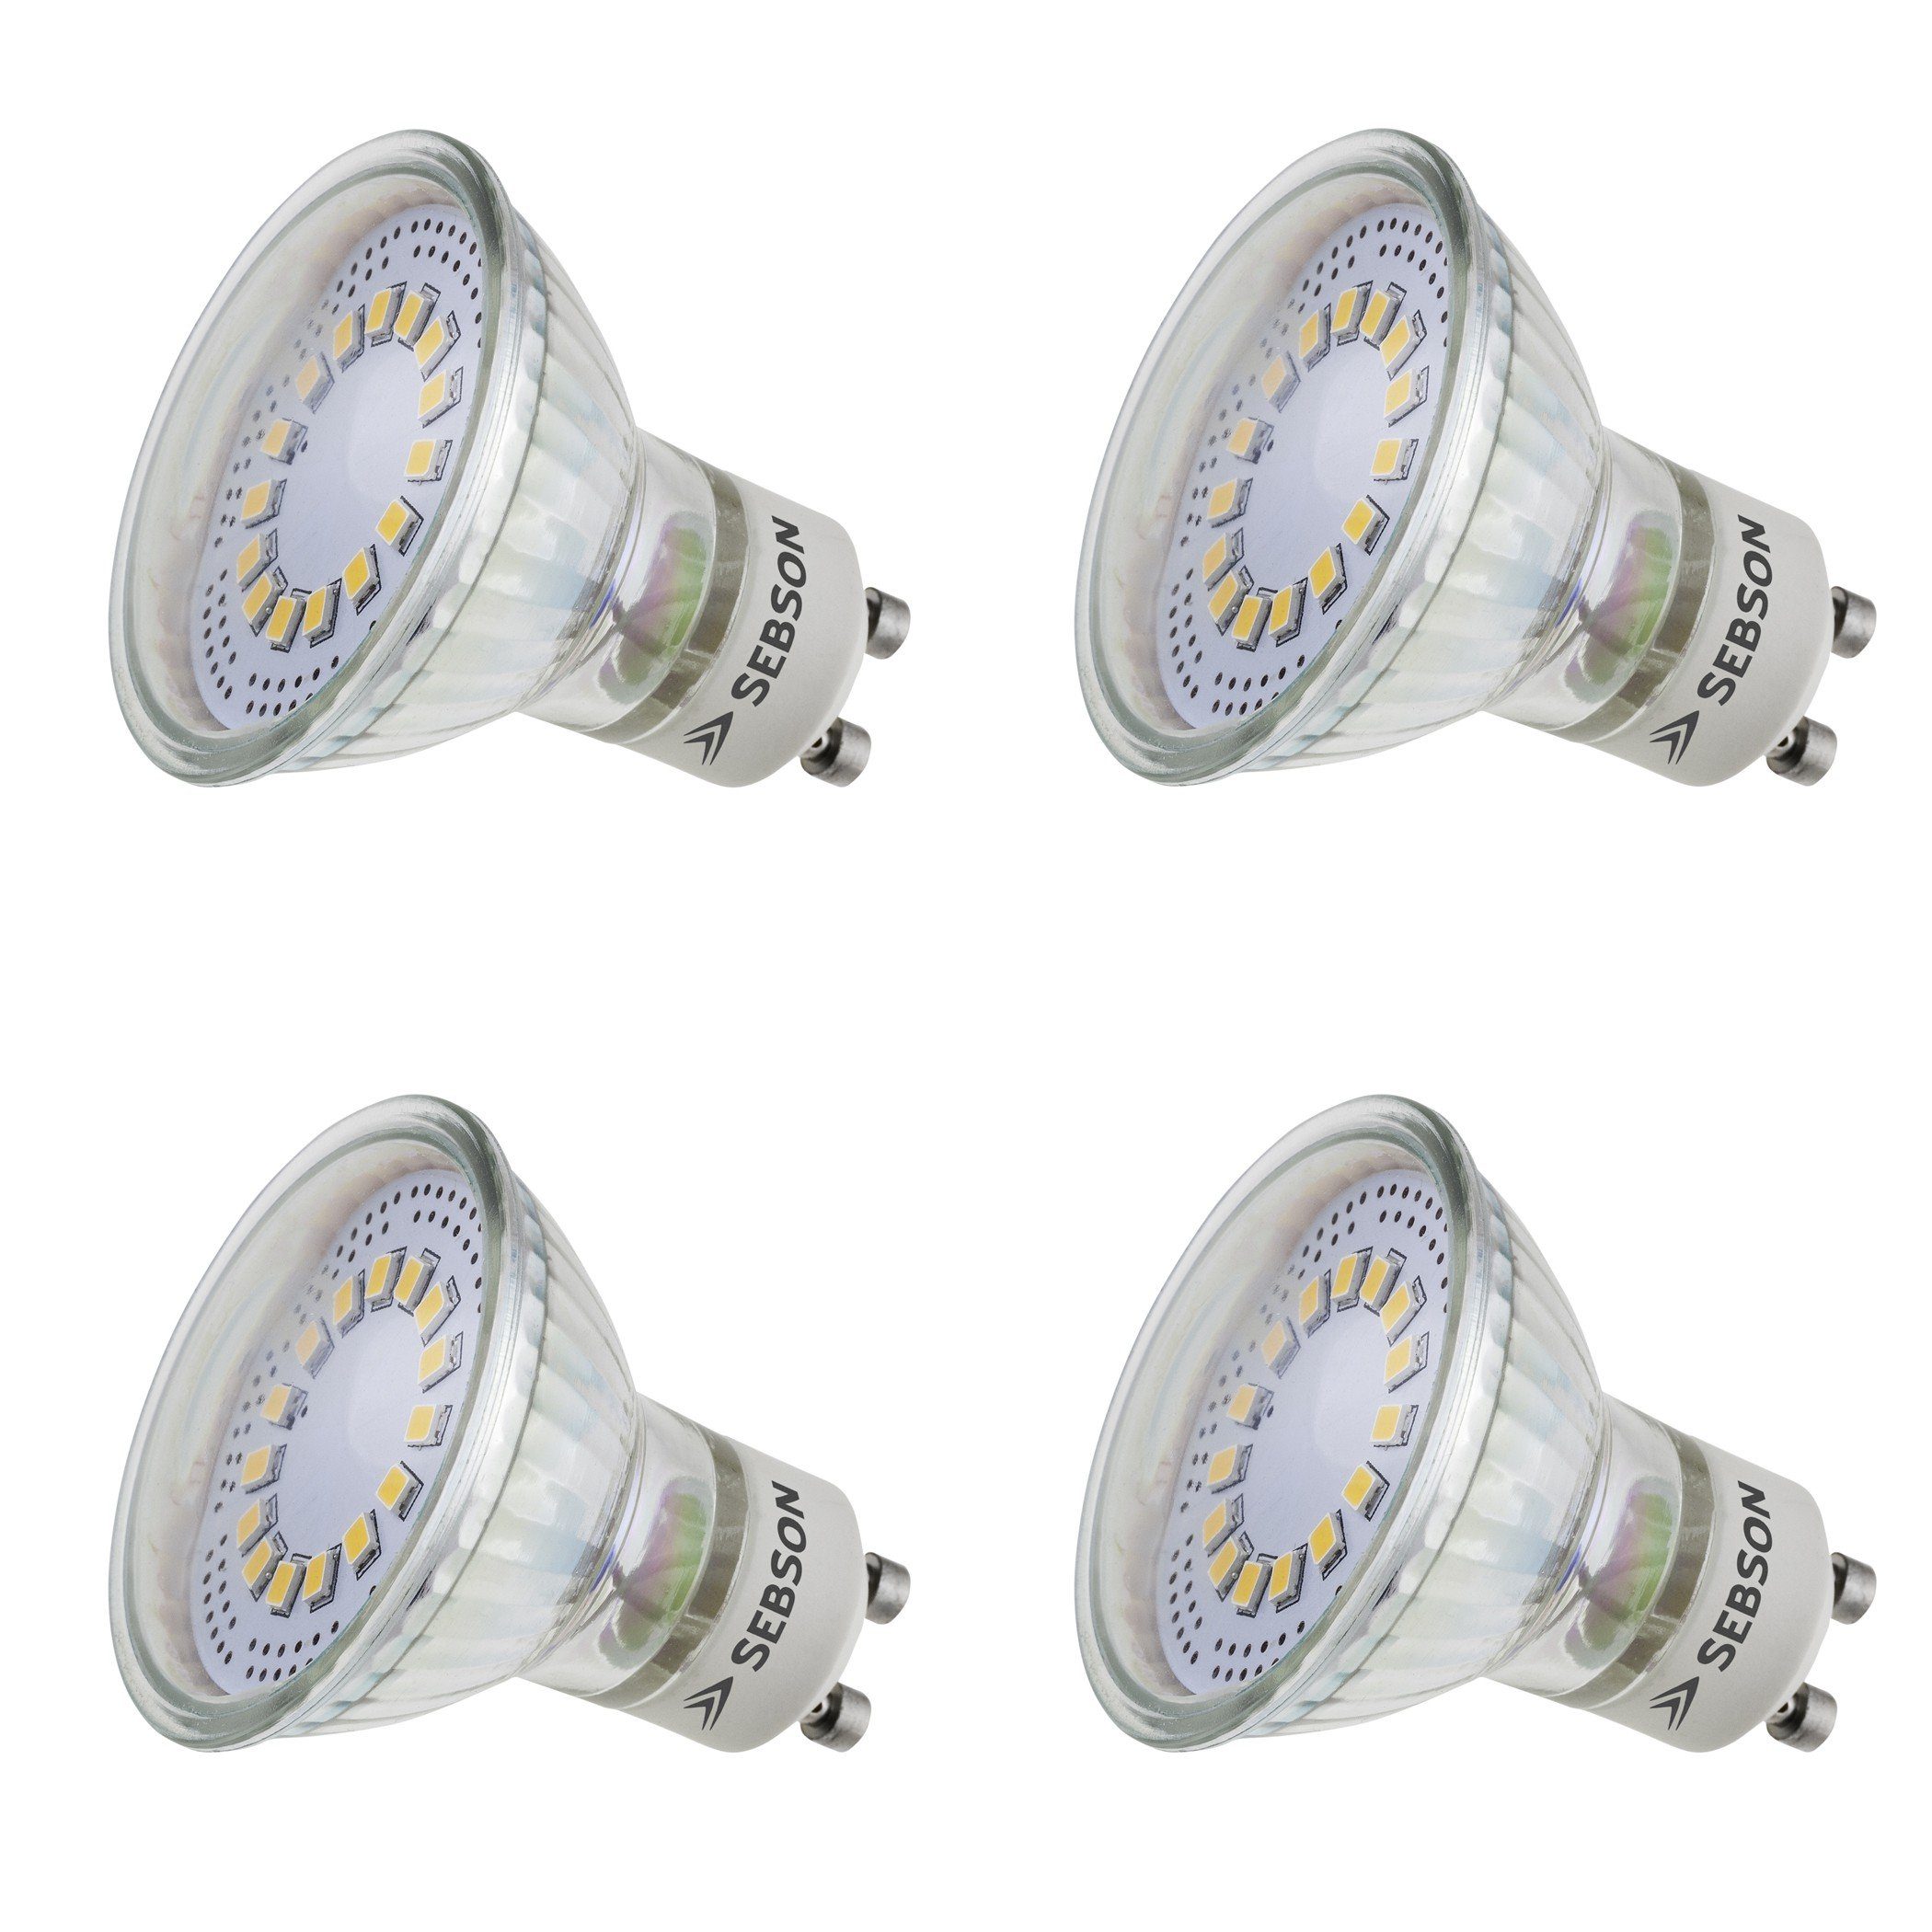 SEBSON »LED Lampe GU10 warmweiß 3,5W 300 Lumen, GU10 LED Strahler 230V, LED  Leuchtmittel 110°, 4er Pack« LED-Leuchtmittel online kaufen | OTTO